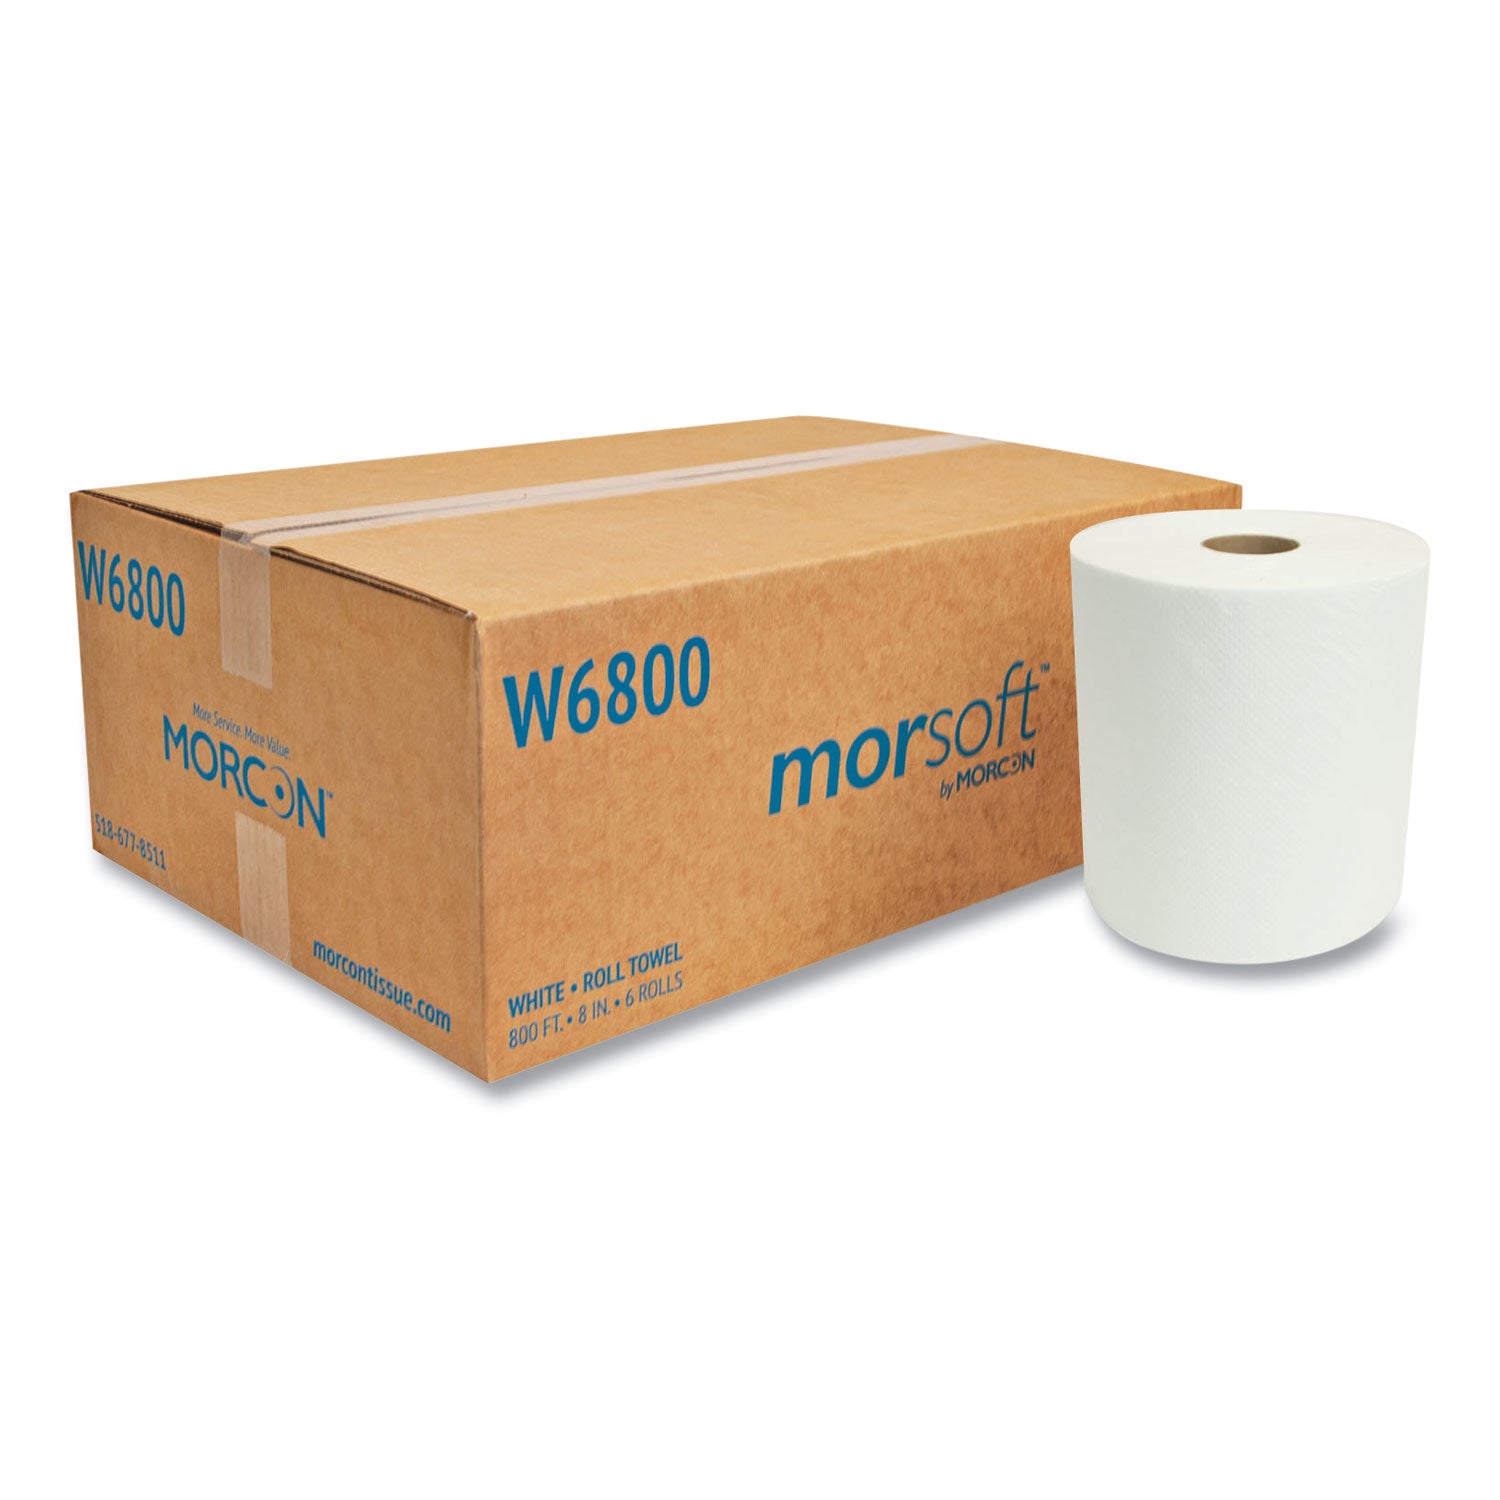 morsoft-universal-roll-towels-1-ply-8-x-800-ft-white-6-rolls-carton_morw6800 - 1